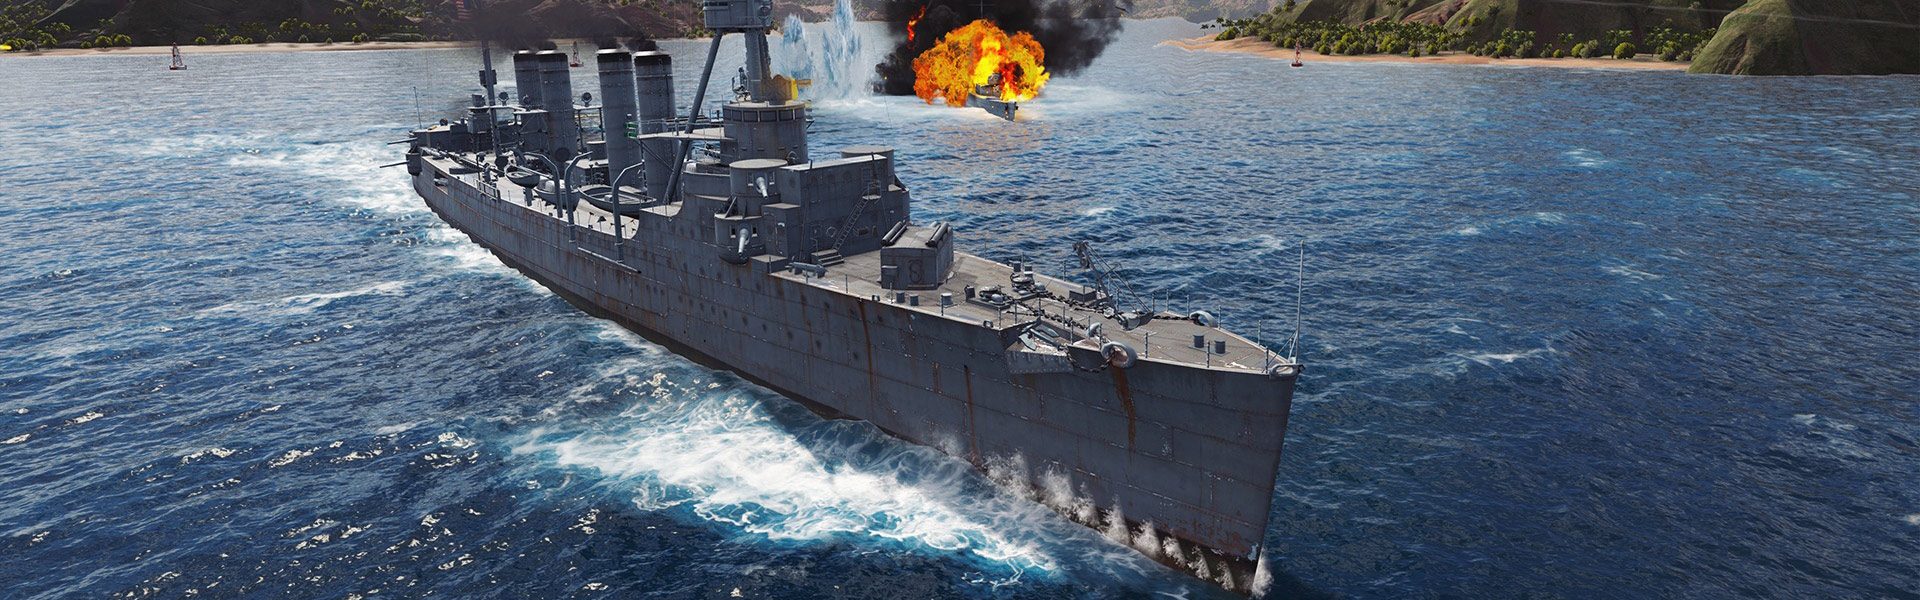 world of warships ps4 news